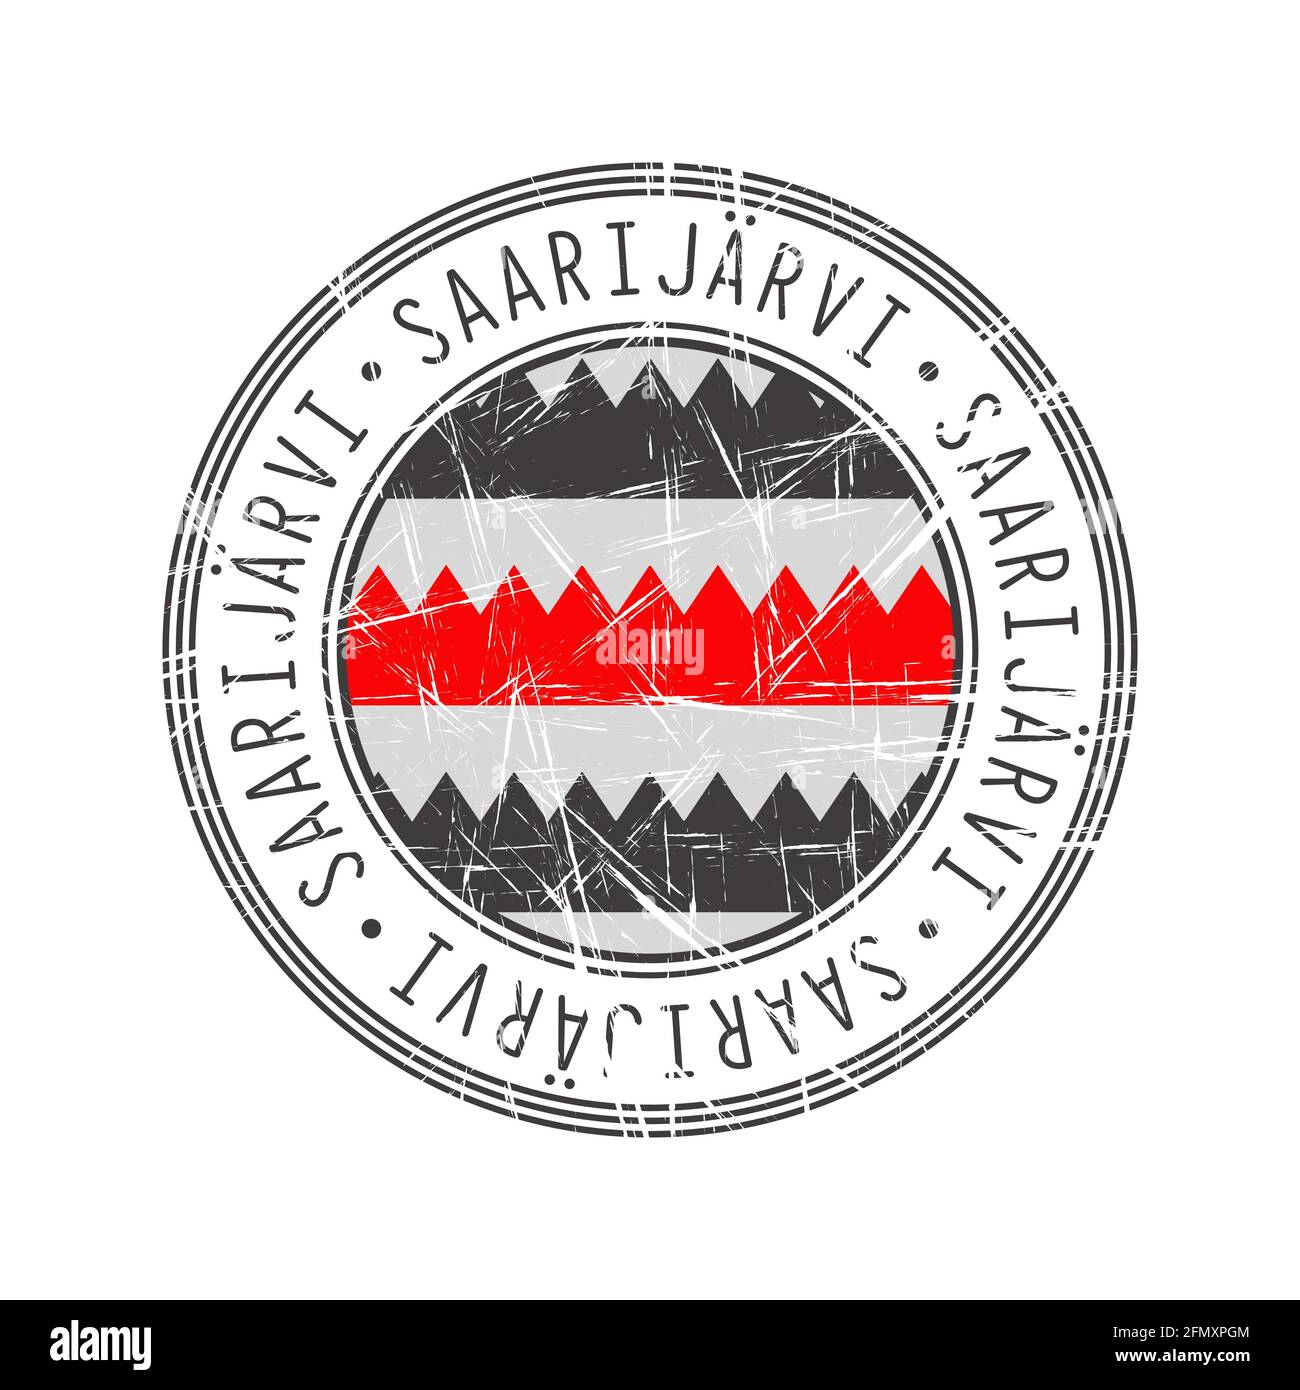 Saarijarvi city, Finland. Grunge postal rubber stamp over white background Stock Vector